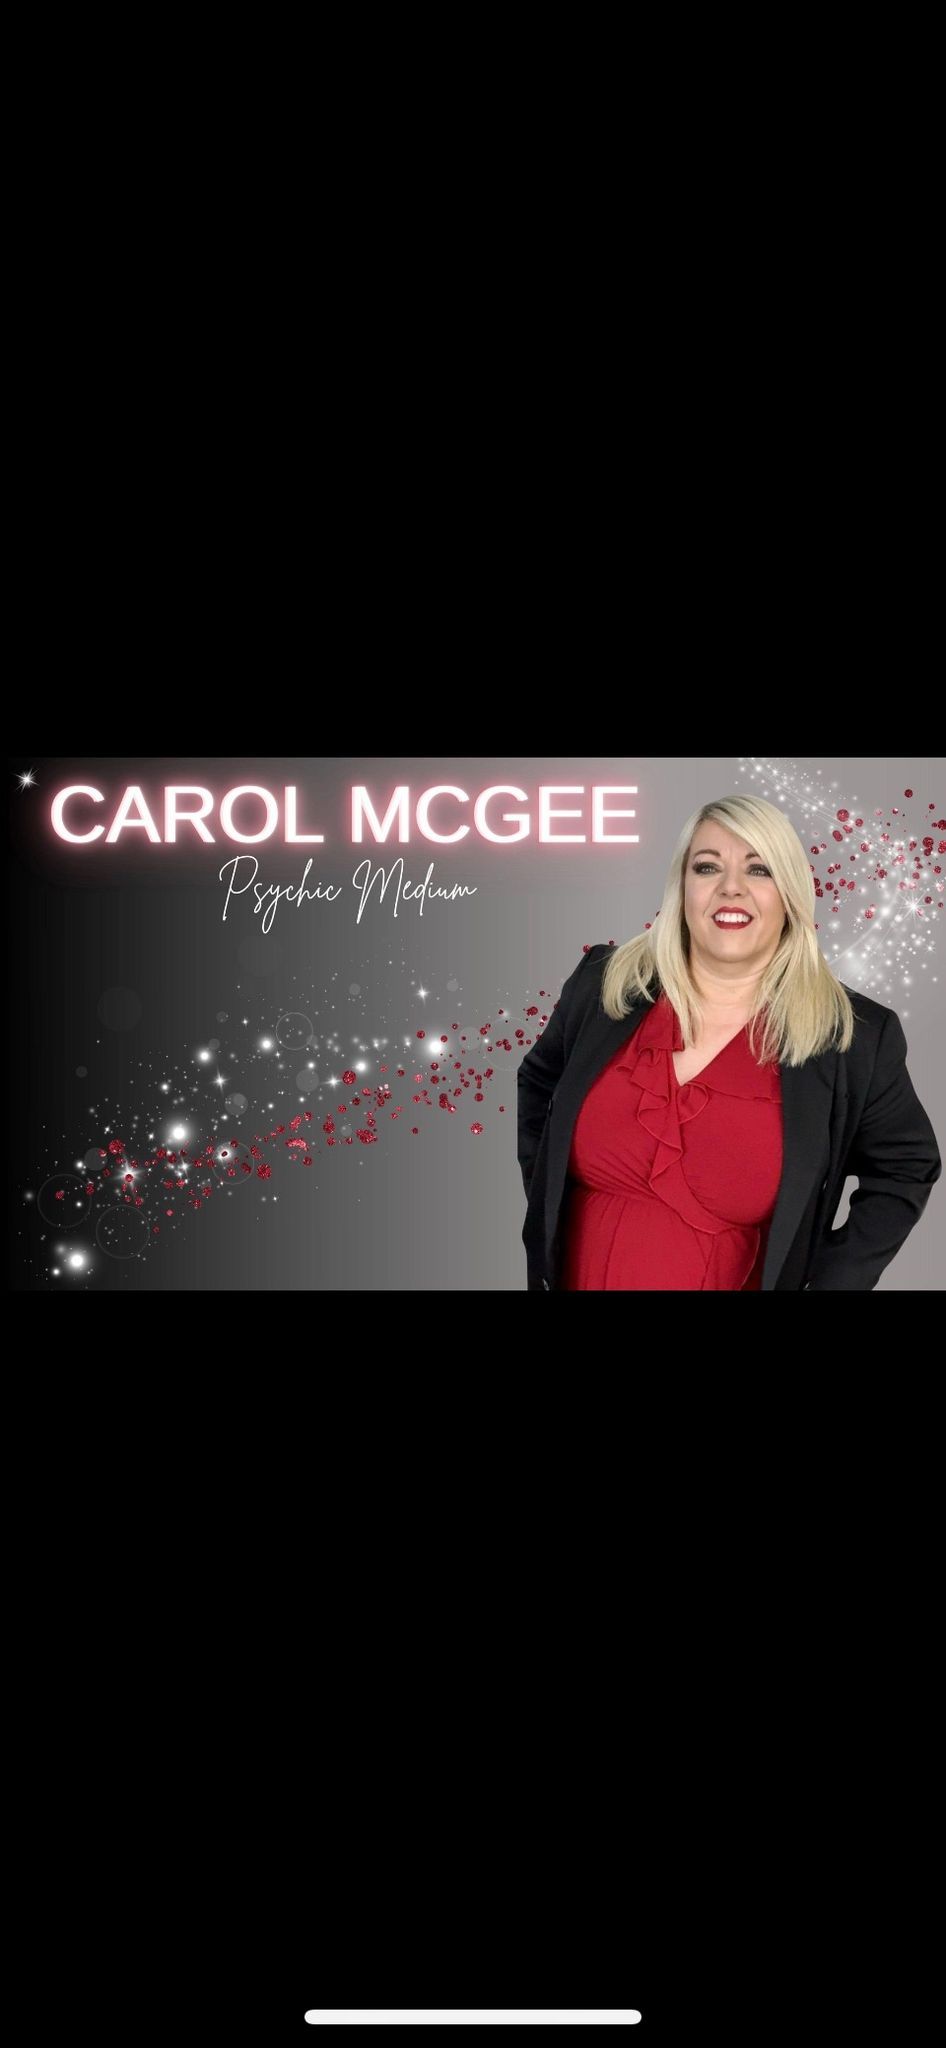 Carol McGee Pyschic Medium 